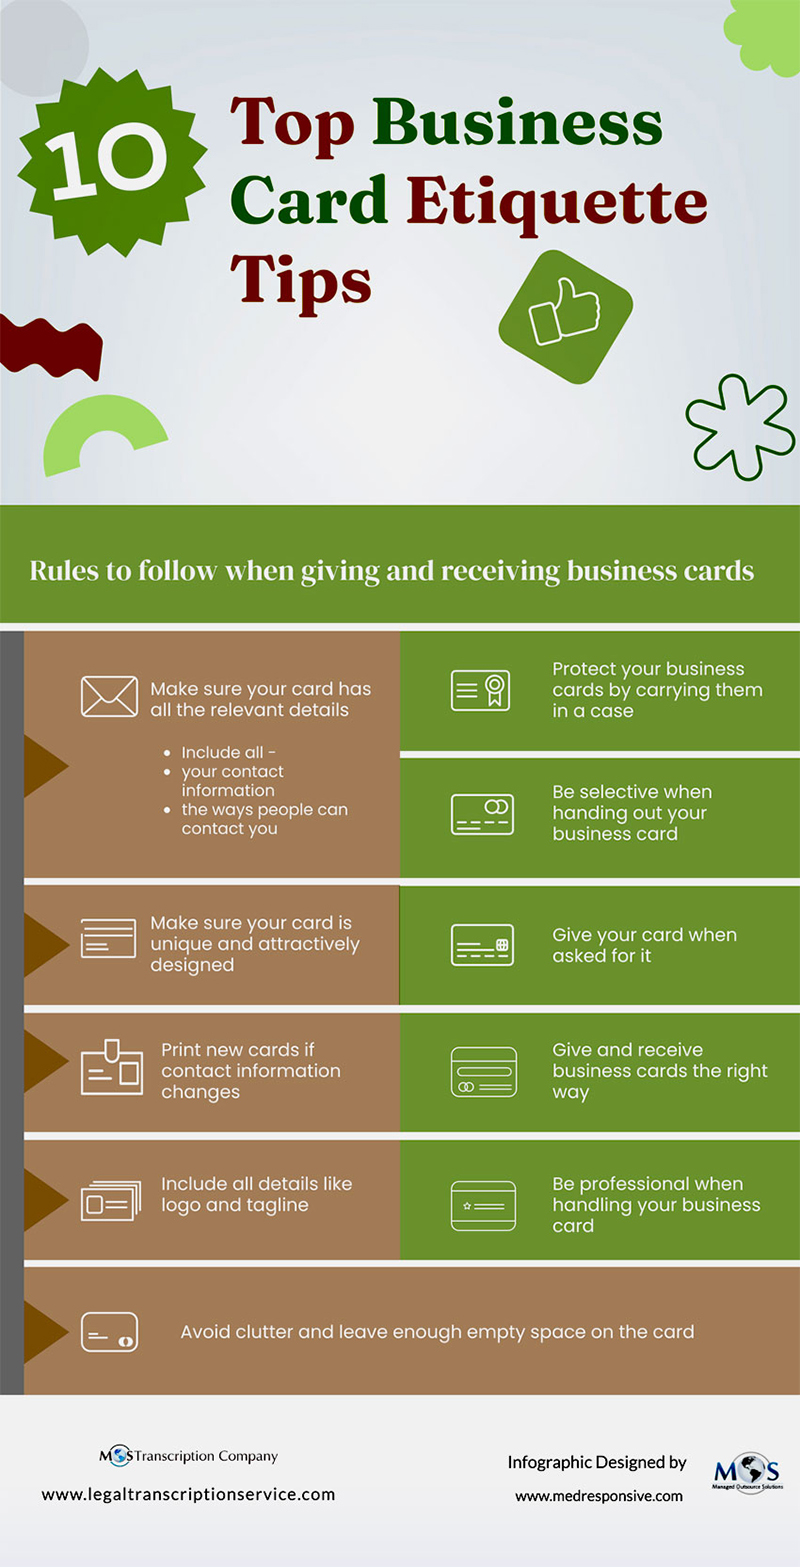 Ten Top Business Card Etiquette Tips